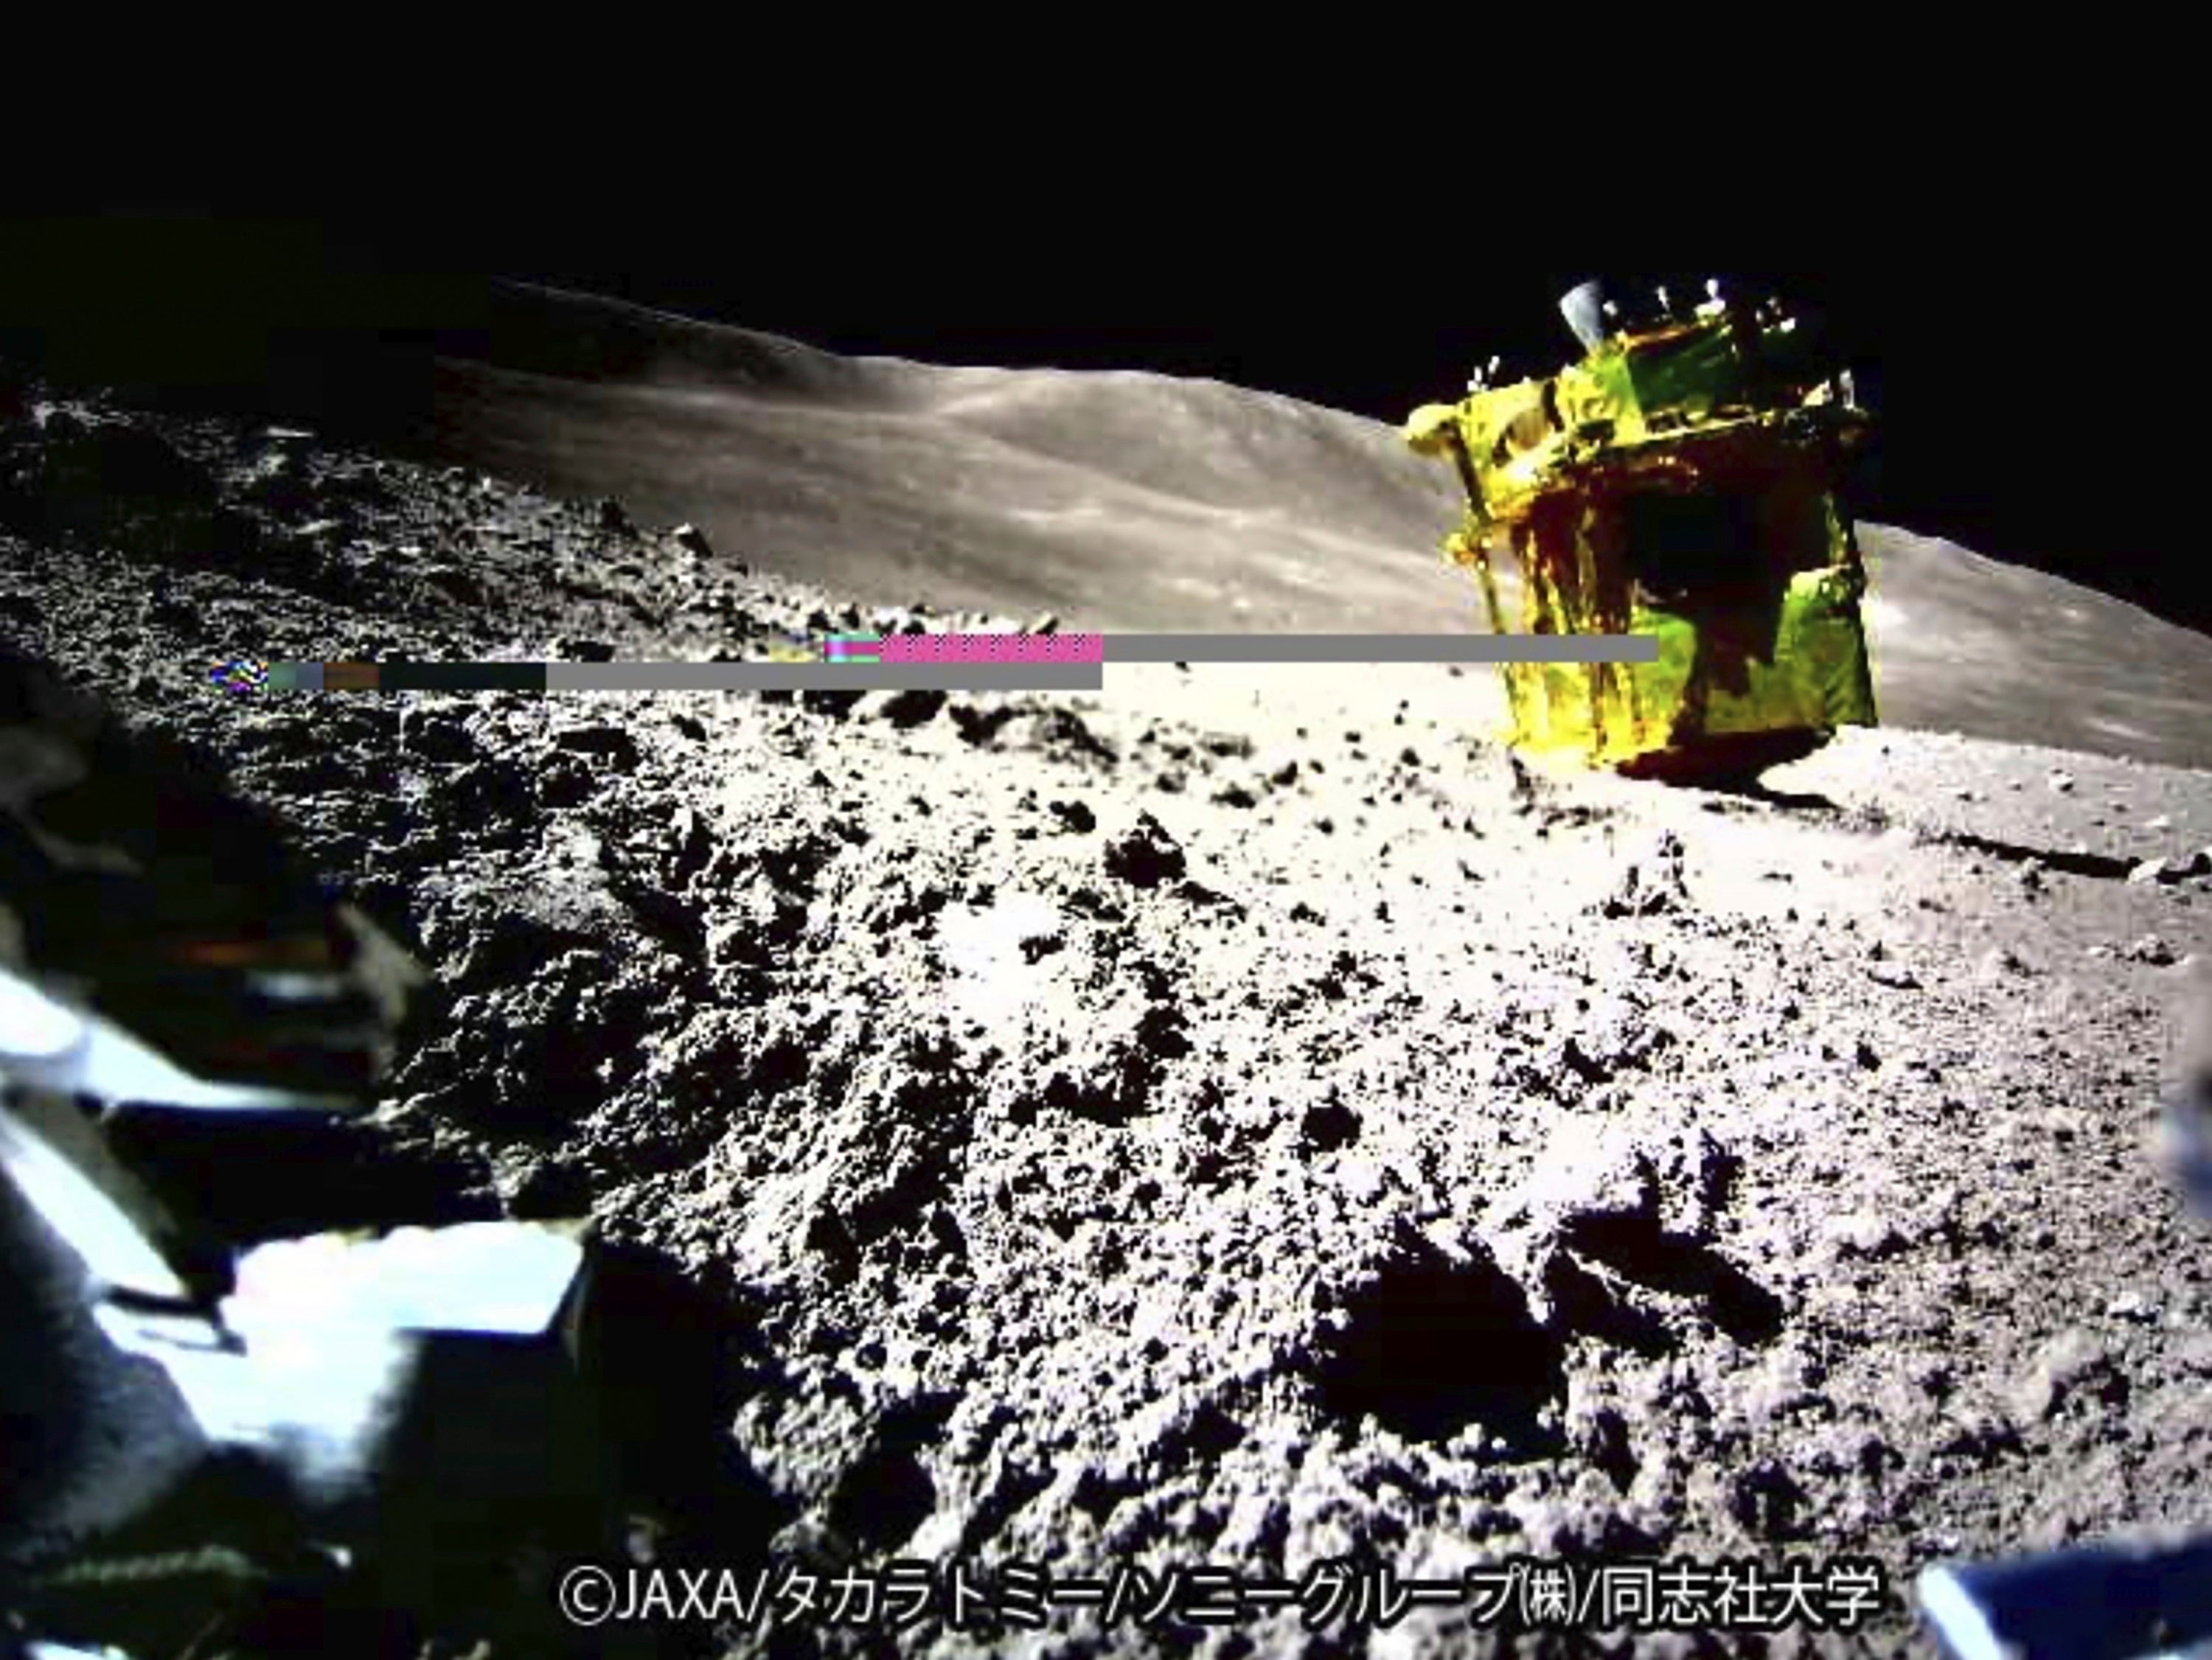 Japan's moon lander survives second lunar night, beating predictions